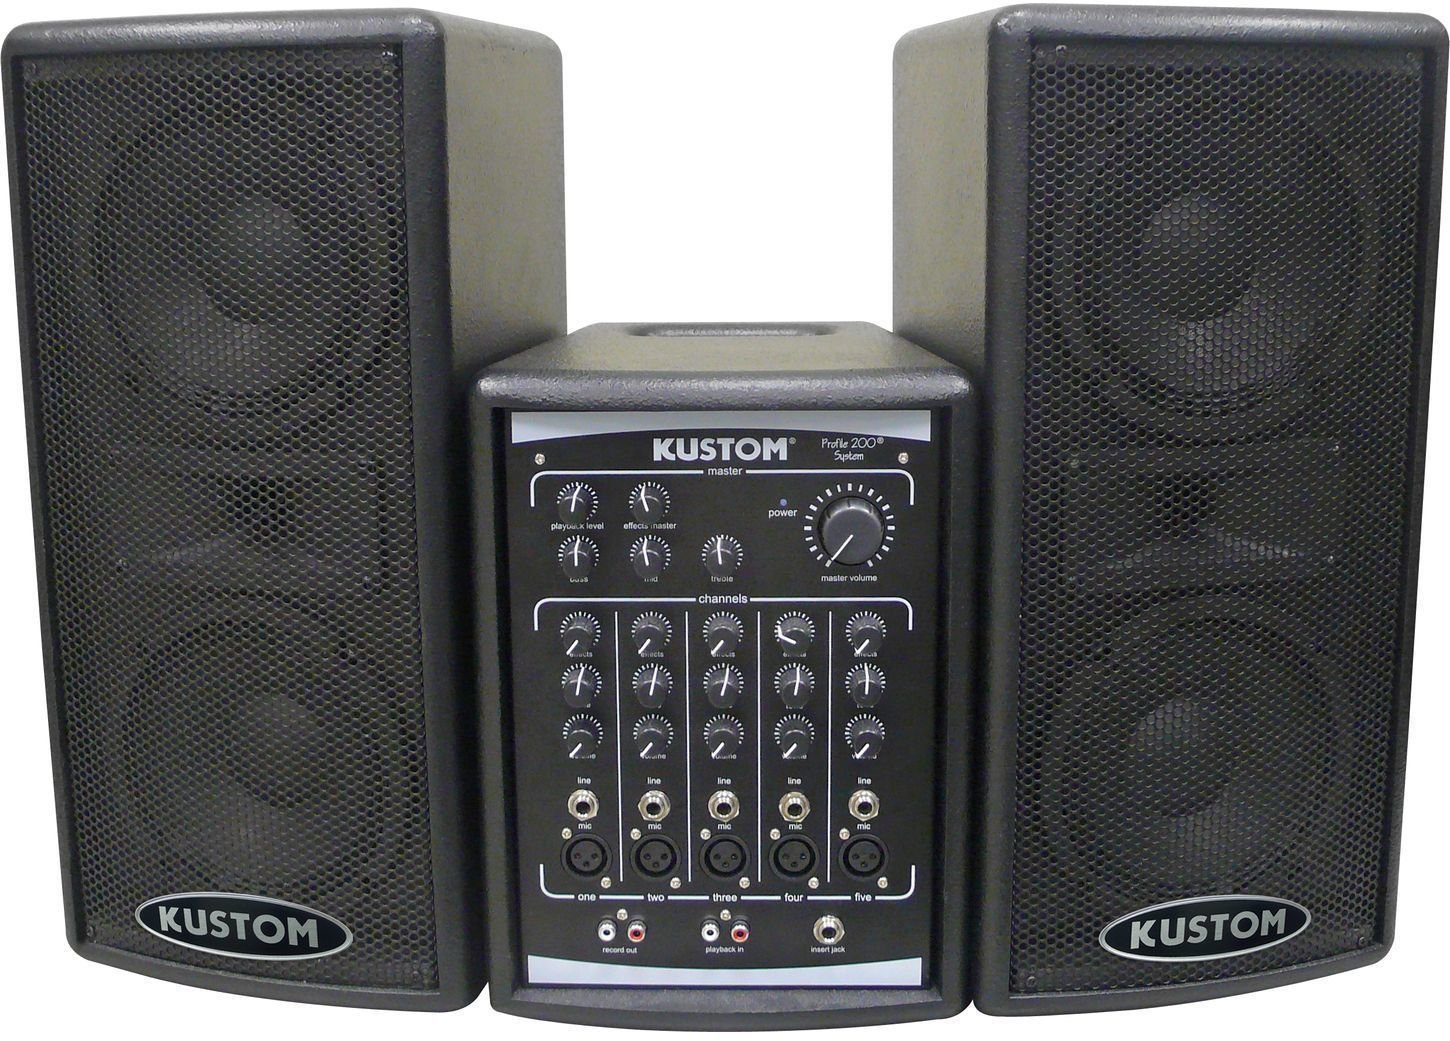 Système de sonorisation portable Kustom Profile 200